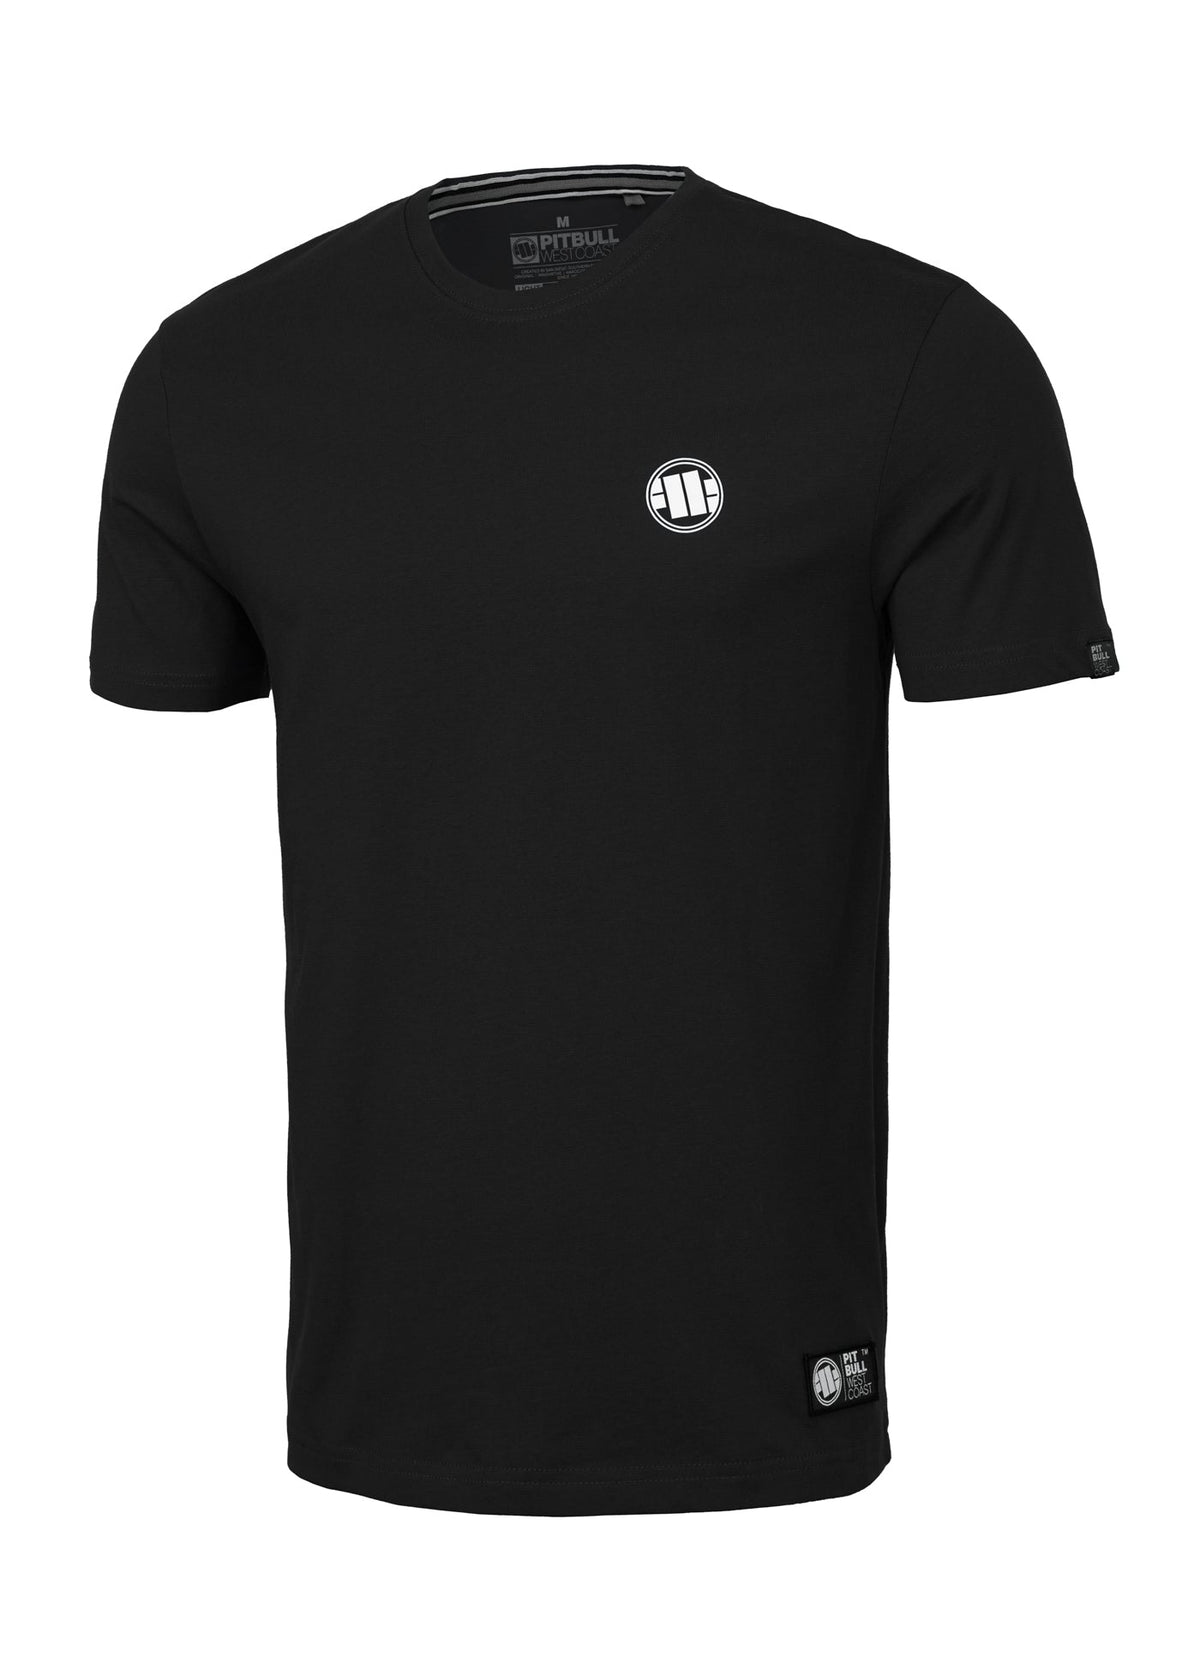 SMALL LOGO 21 Black T-Shirt